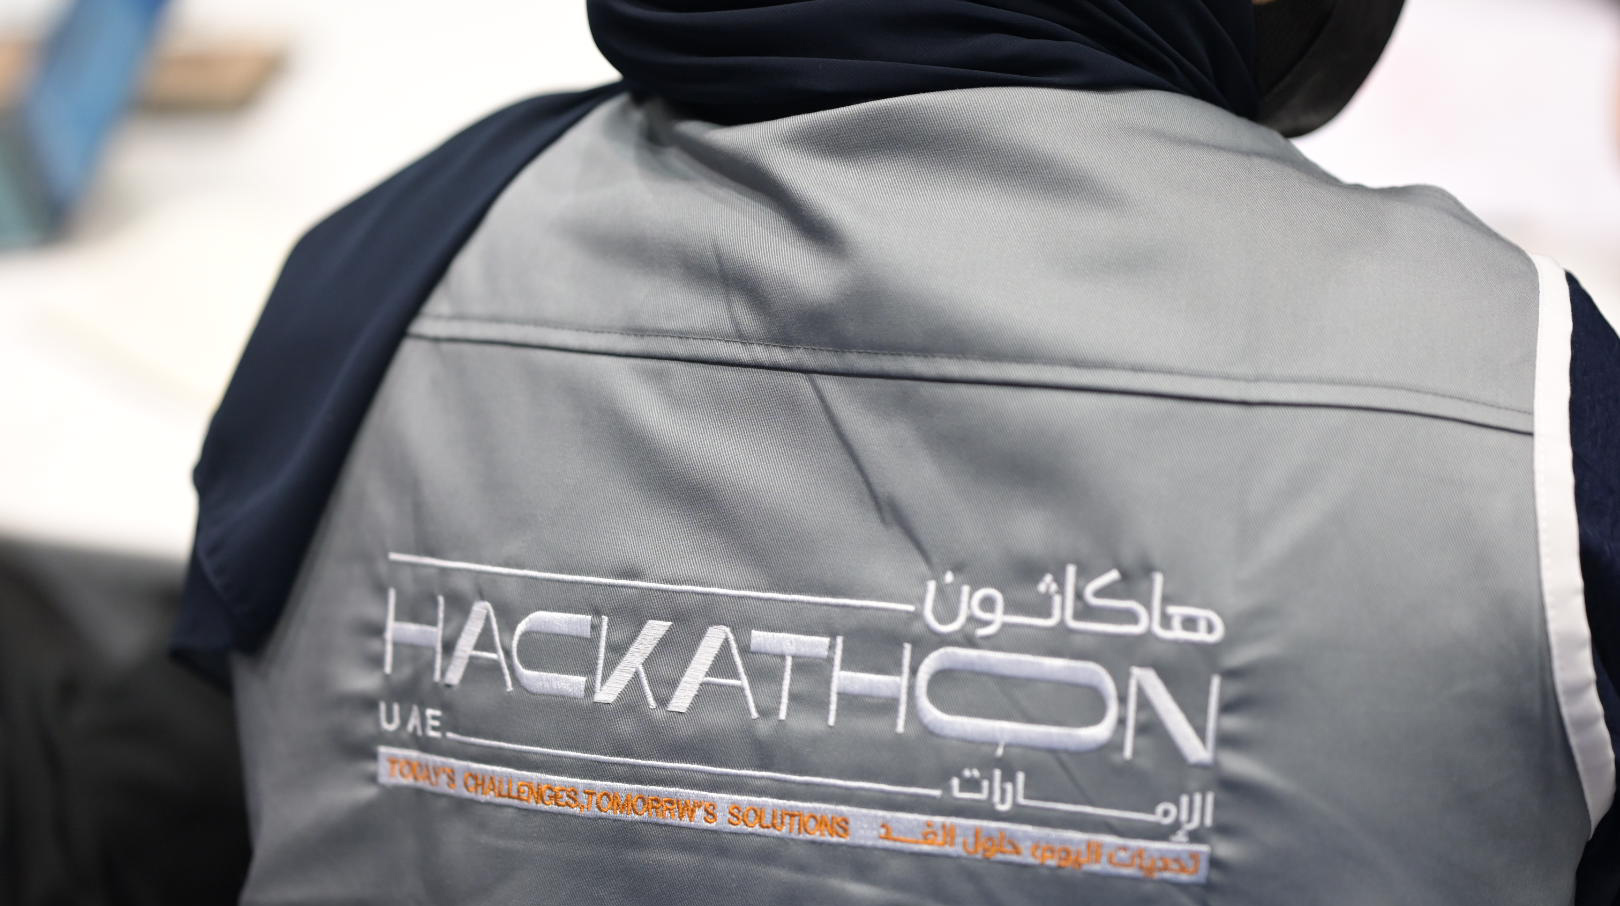 UAE Hackathon Objective